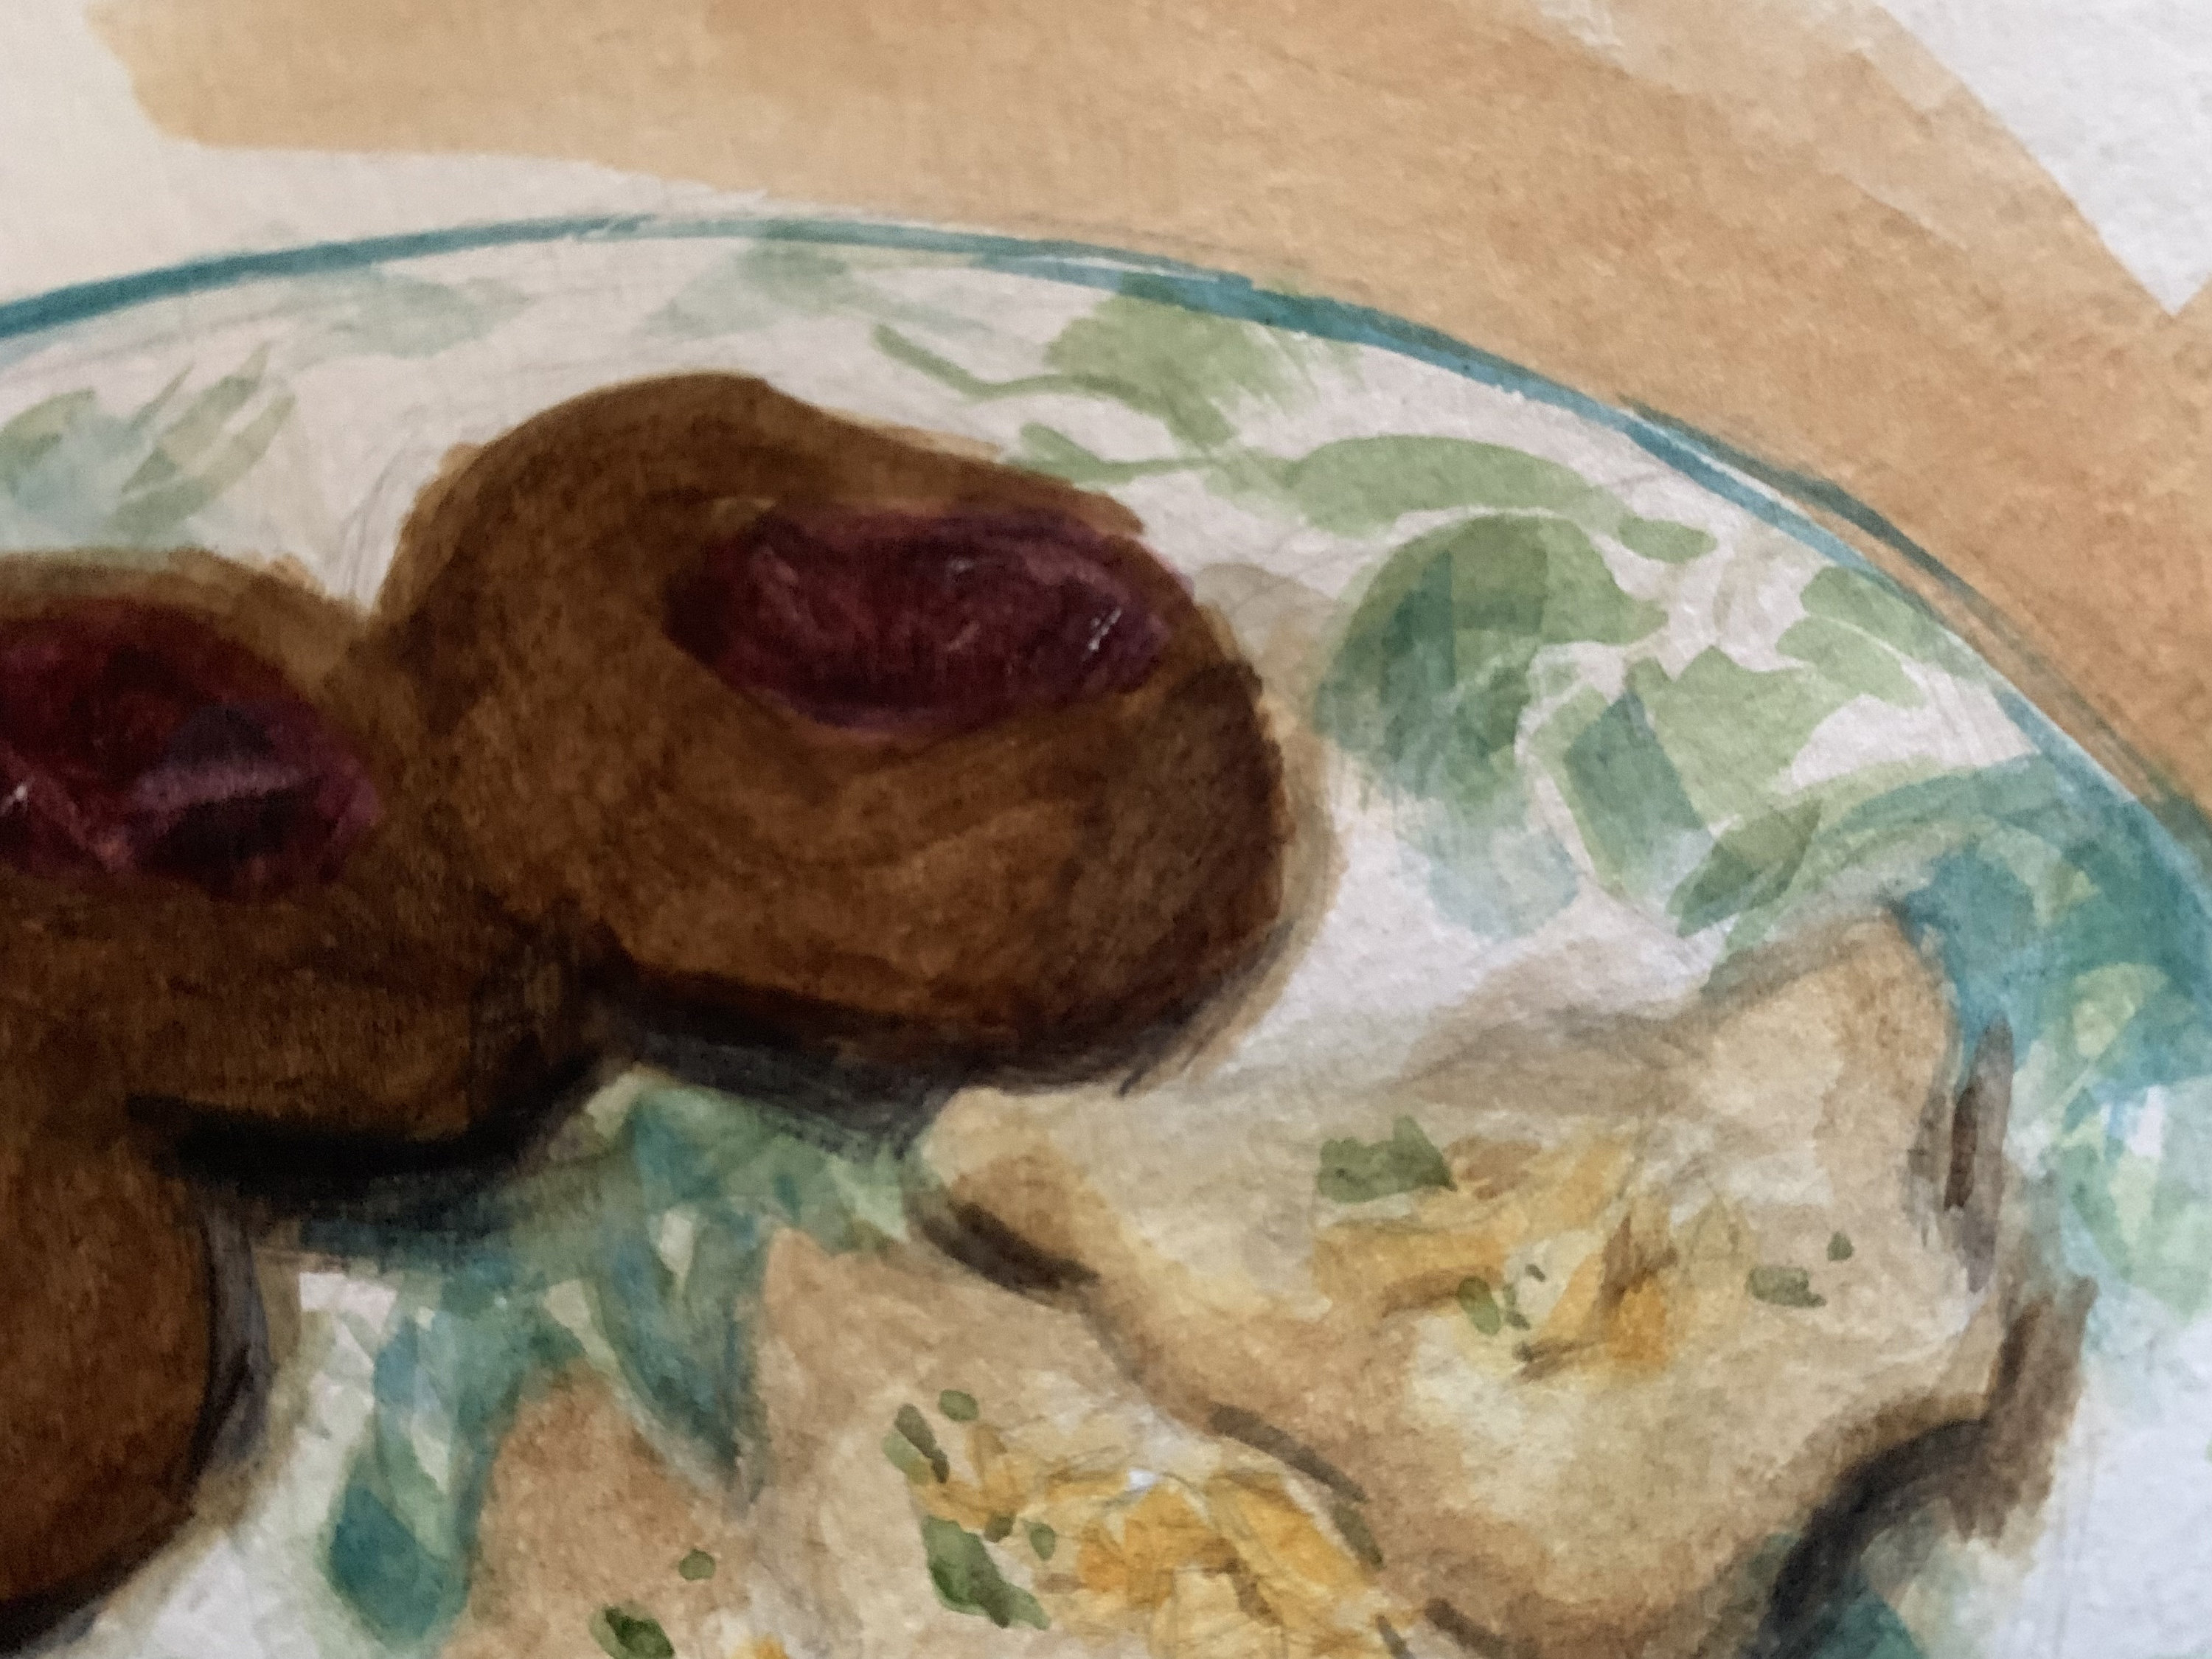 Christmas Cookies, Framed Original Watercolor Painting on 5x7